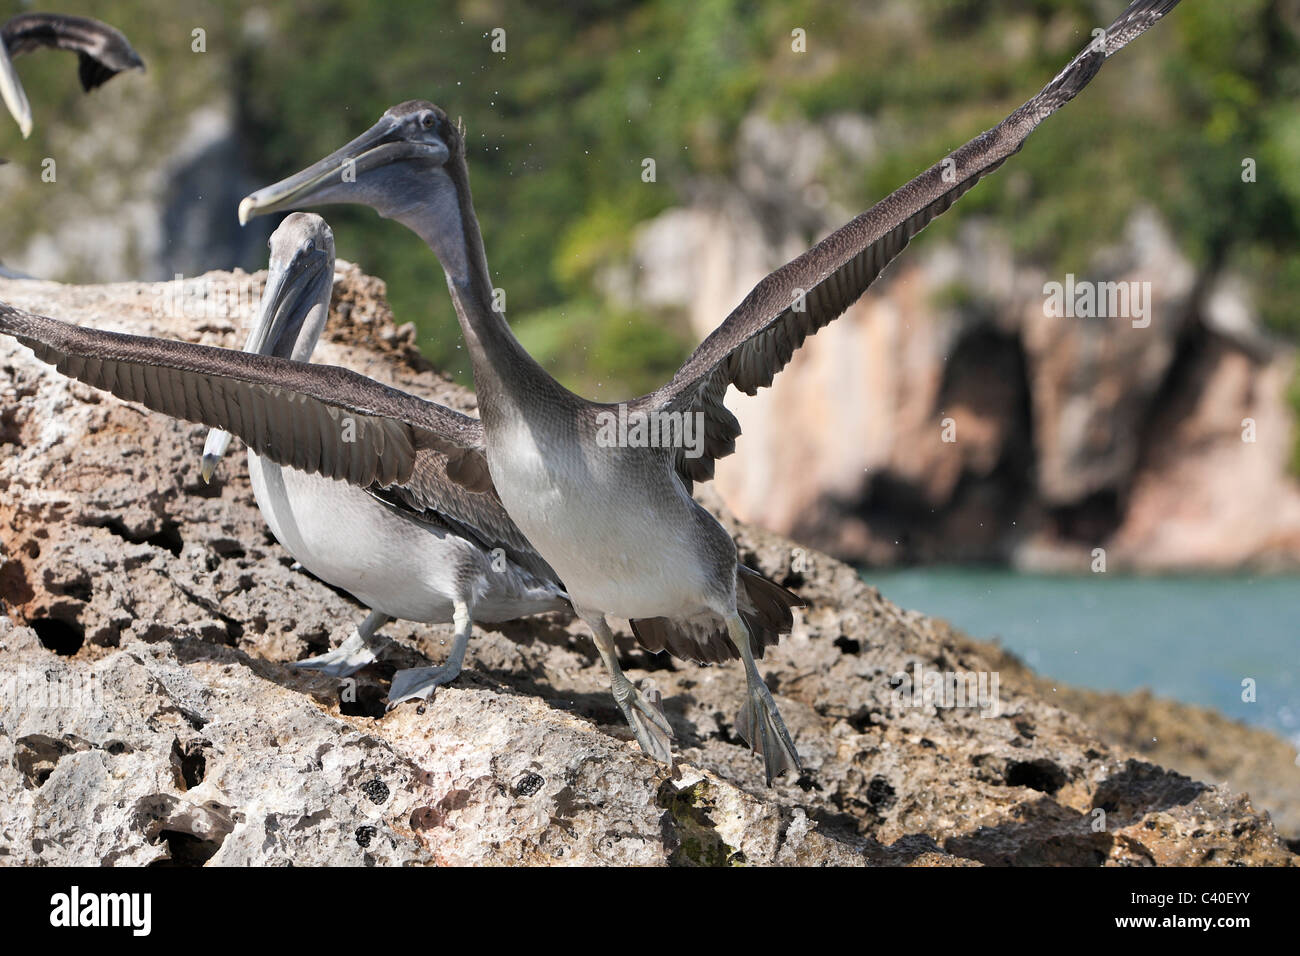 Pelicano resting on Rocks, Pelecanus occidentalis, Los Haitises National Park, Dominican Republic Stock Photo